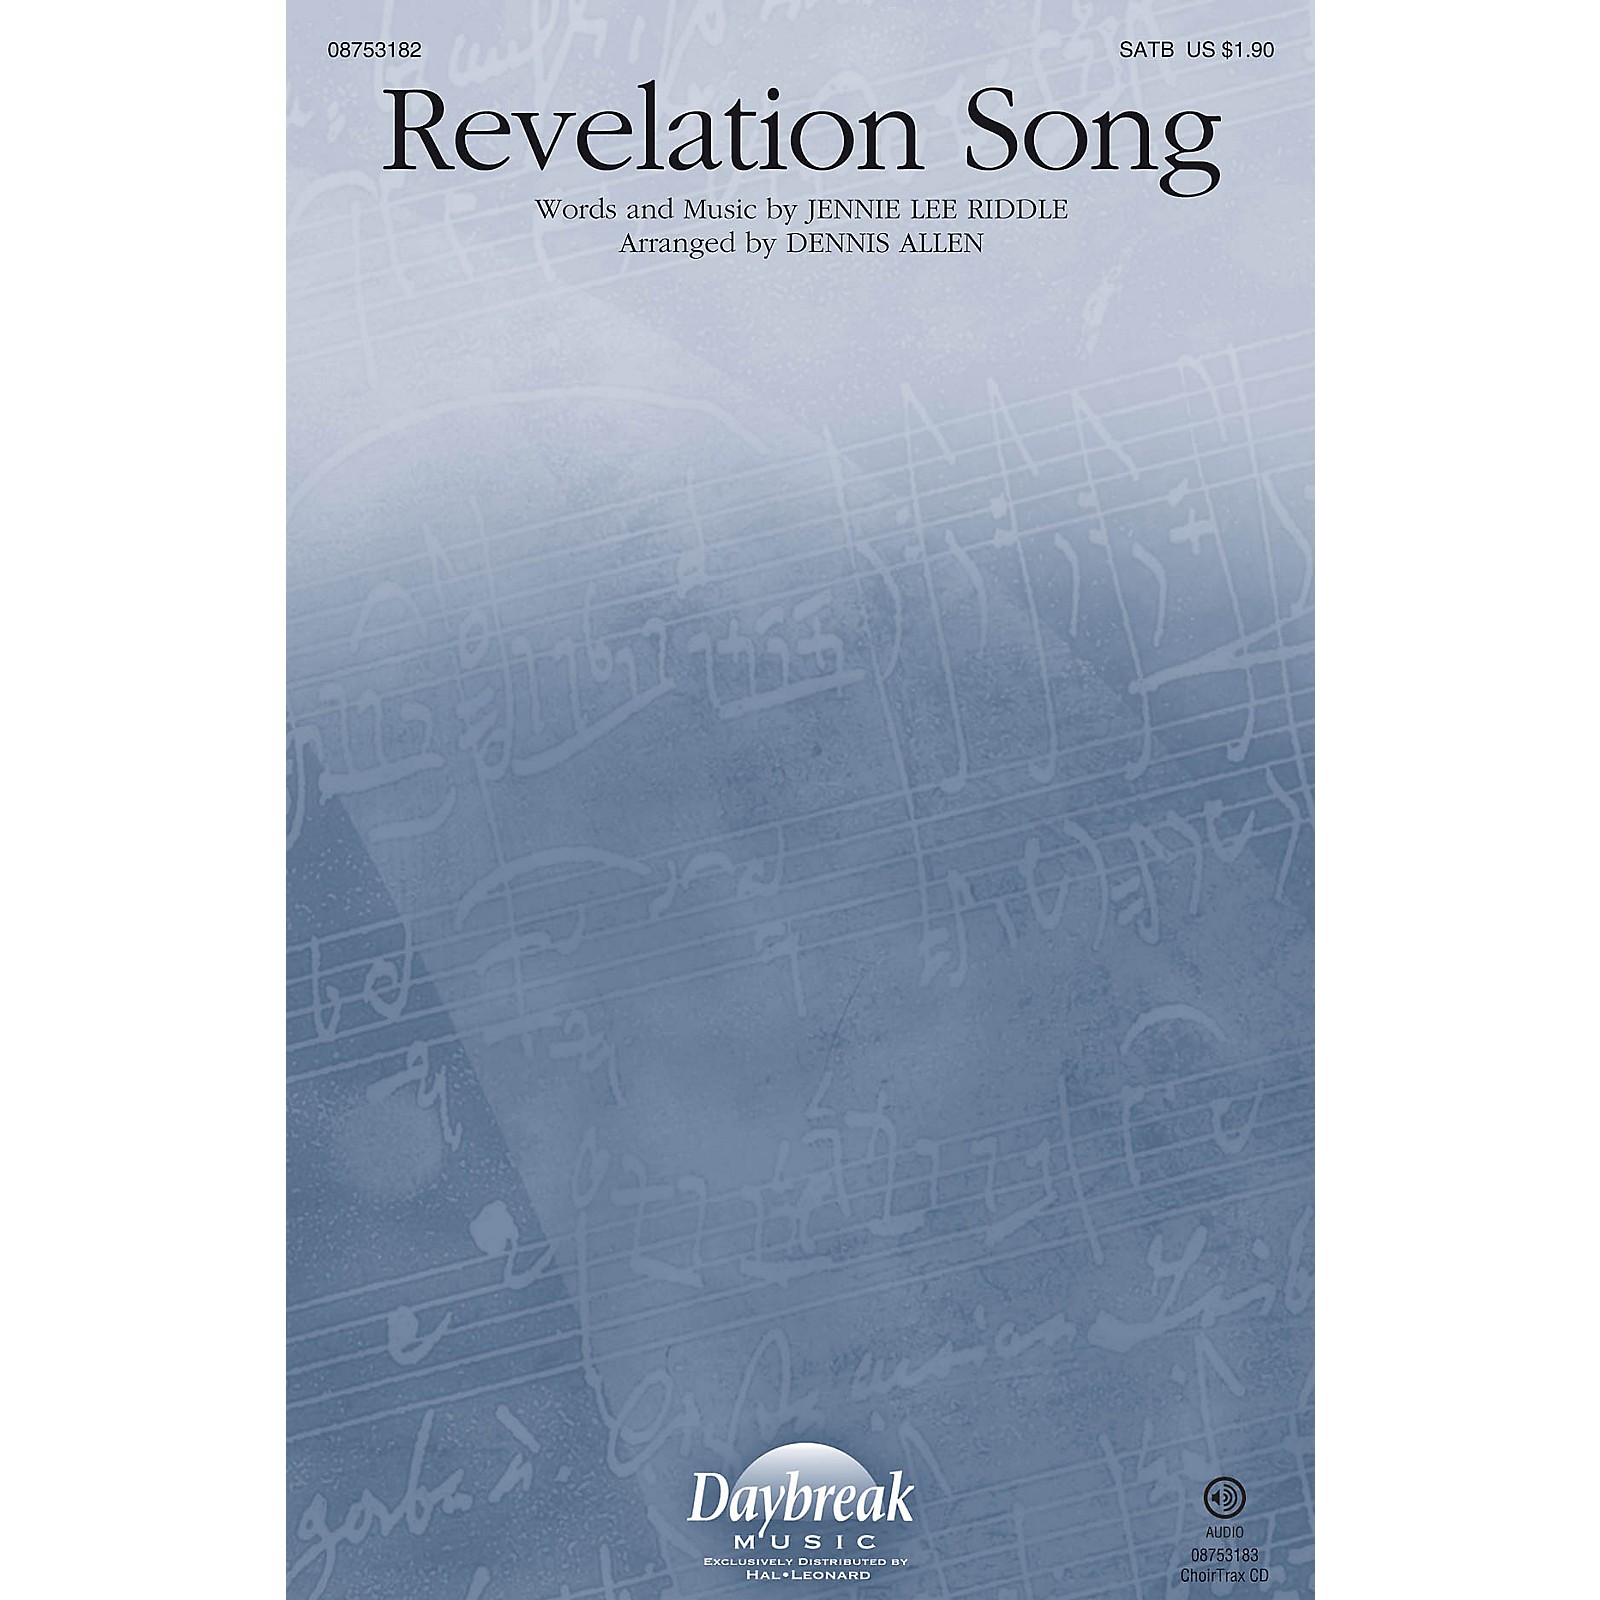 Revelation Song Sheet Music, Dennis Allen